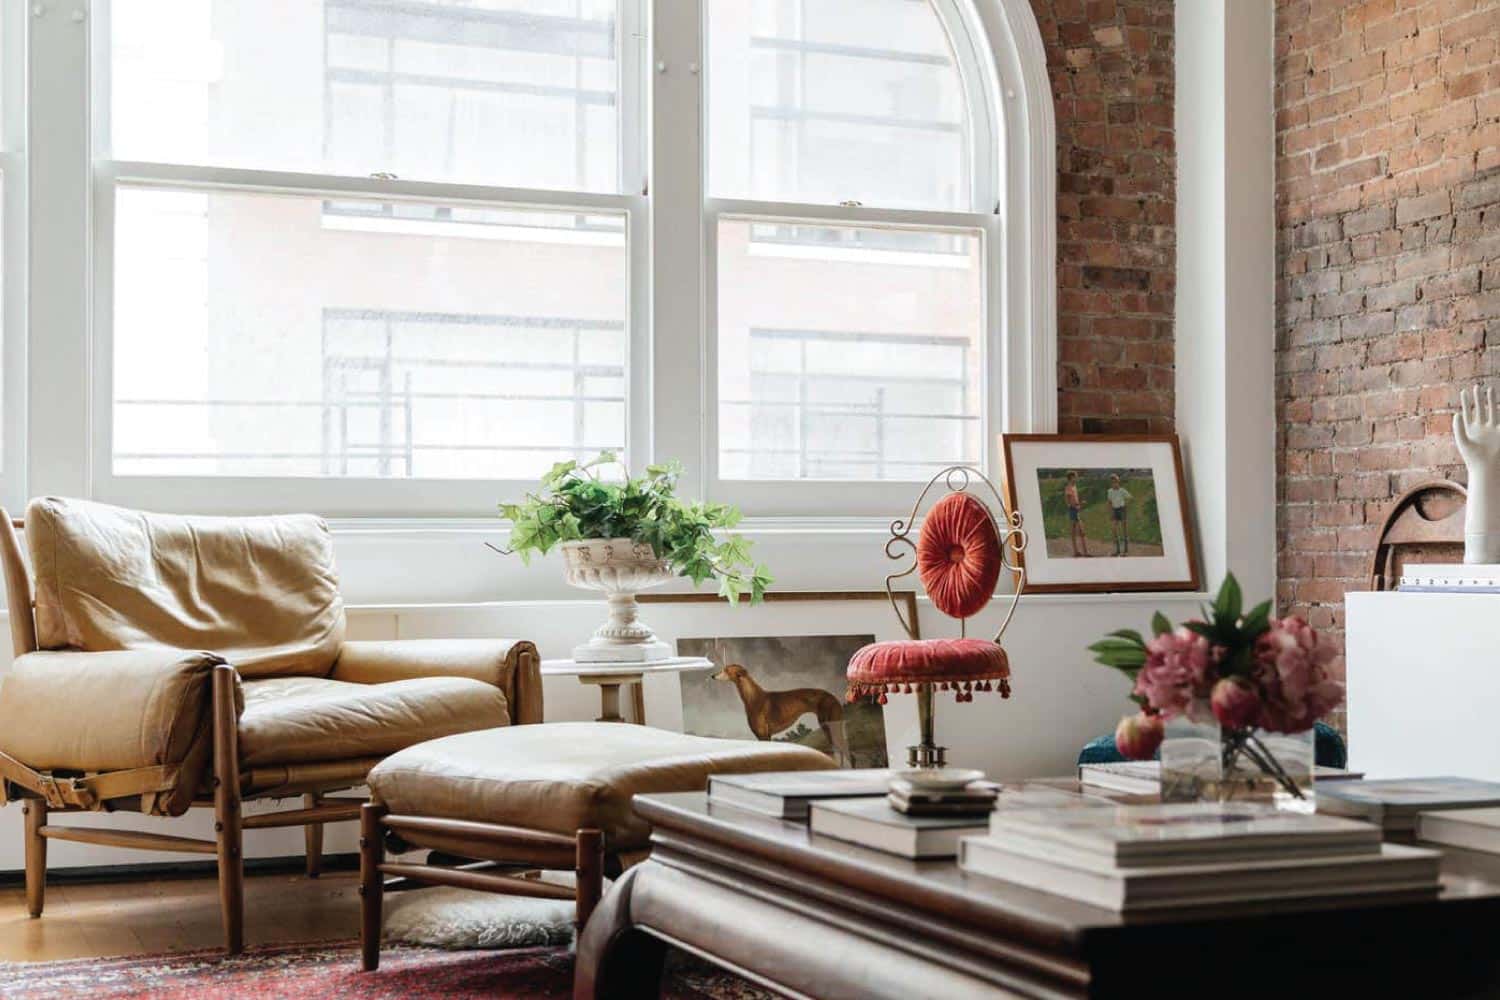 New York City loft designed by Jae Joo: eclectic, maximalist, modern living room